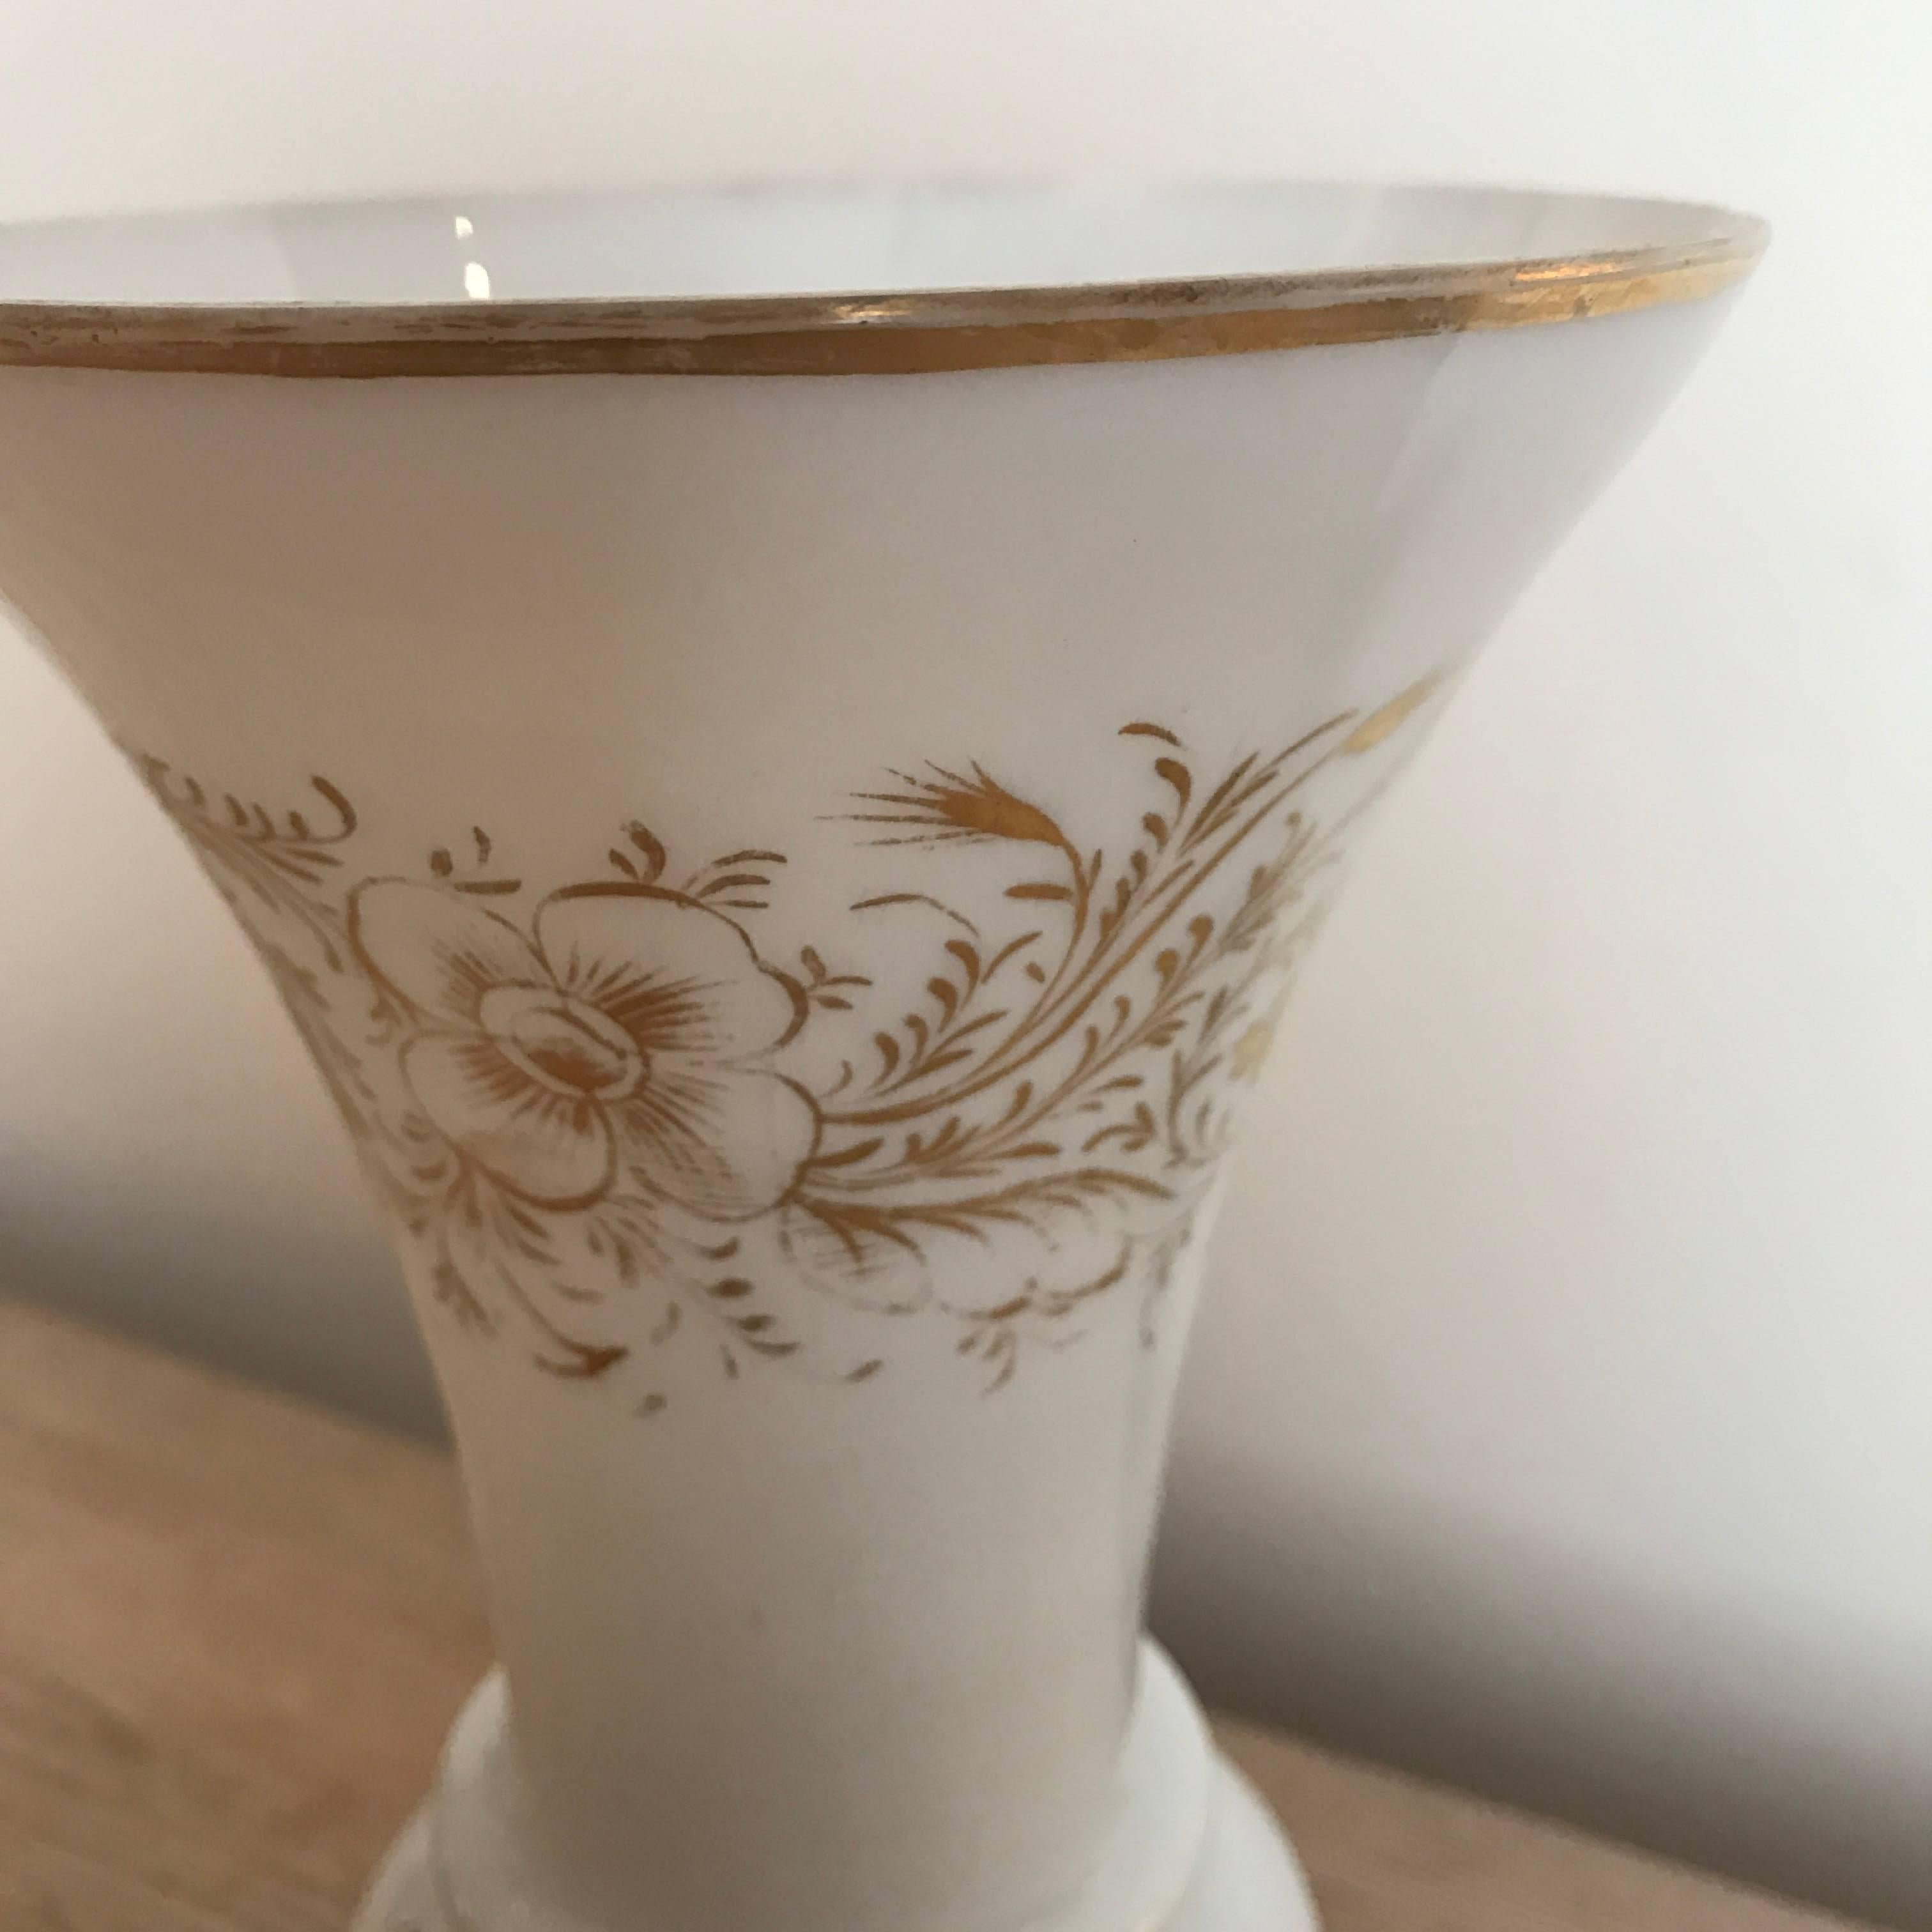 19th century Bristol glass vase.